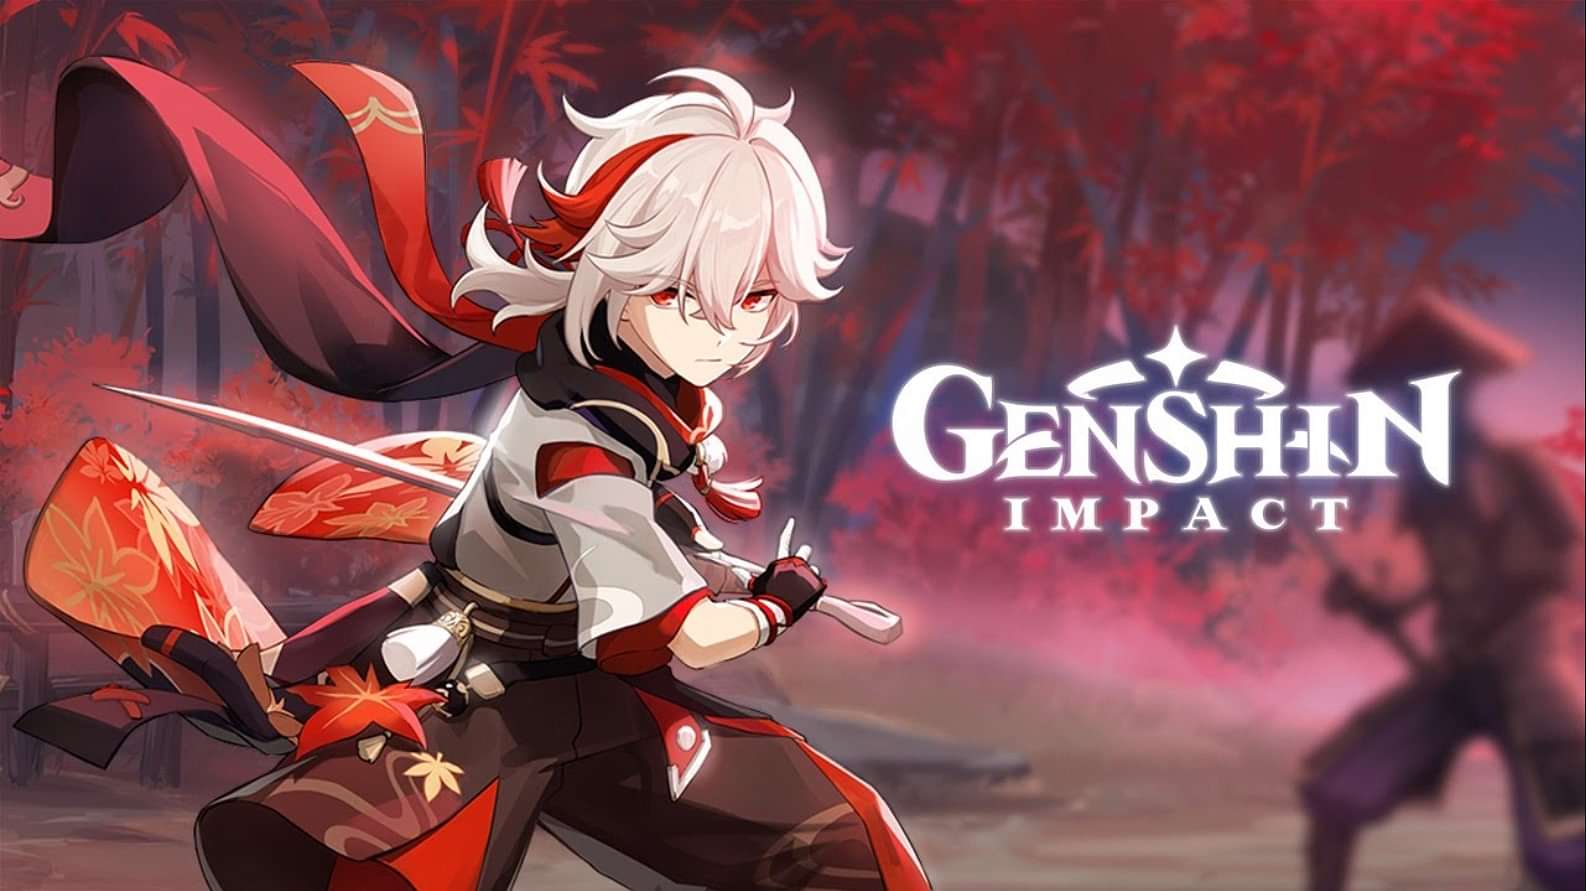 Genshin Impact Kazuha best build and Talent, Ascension materials